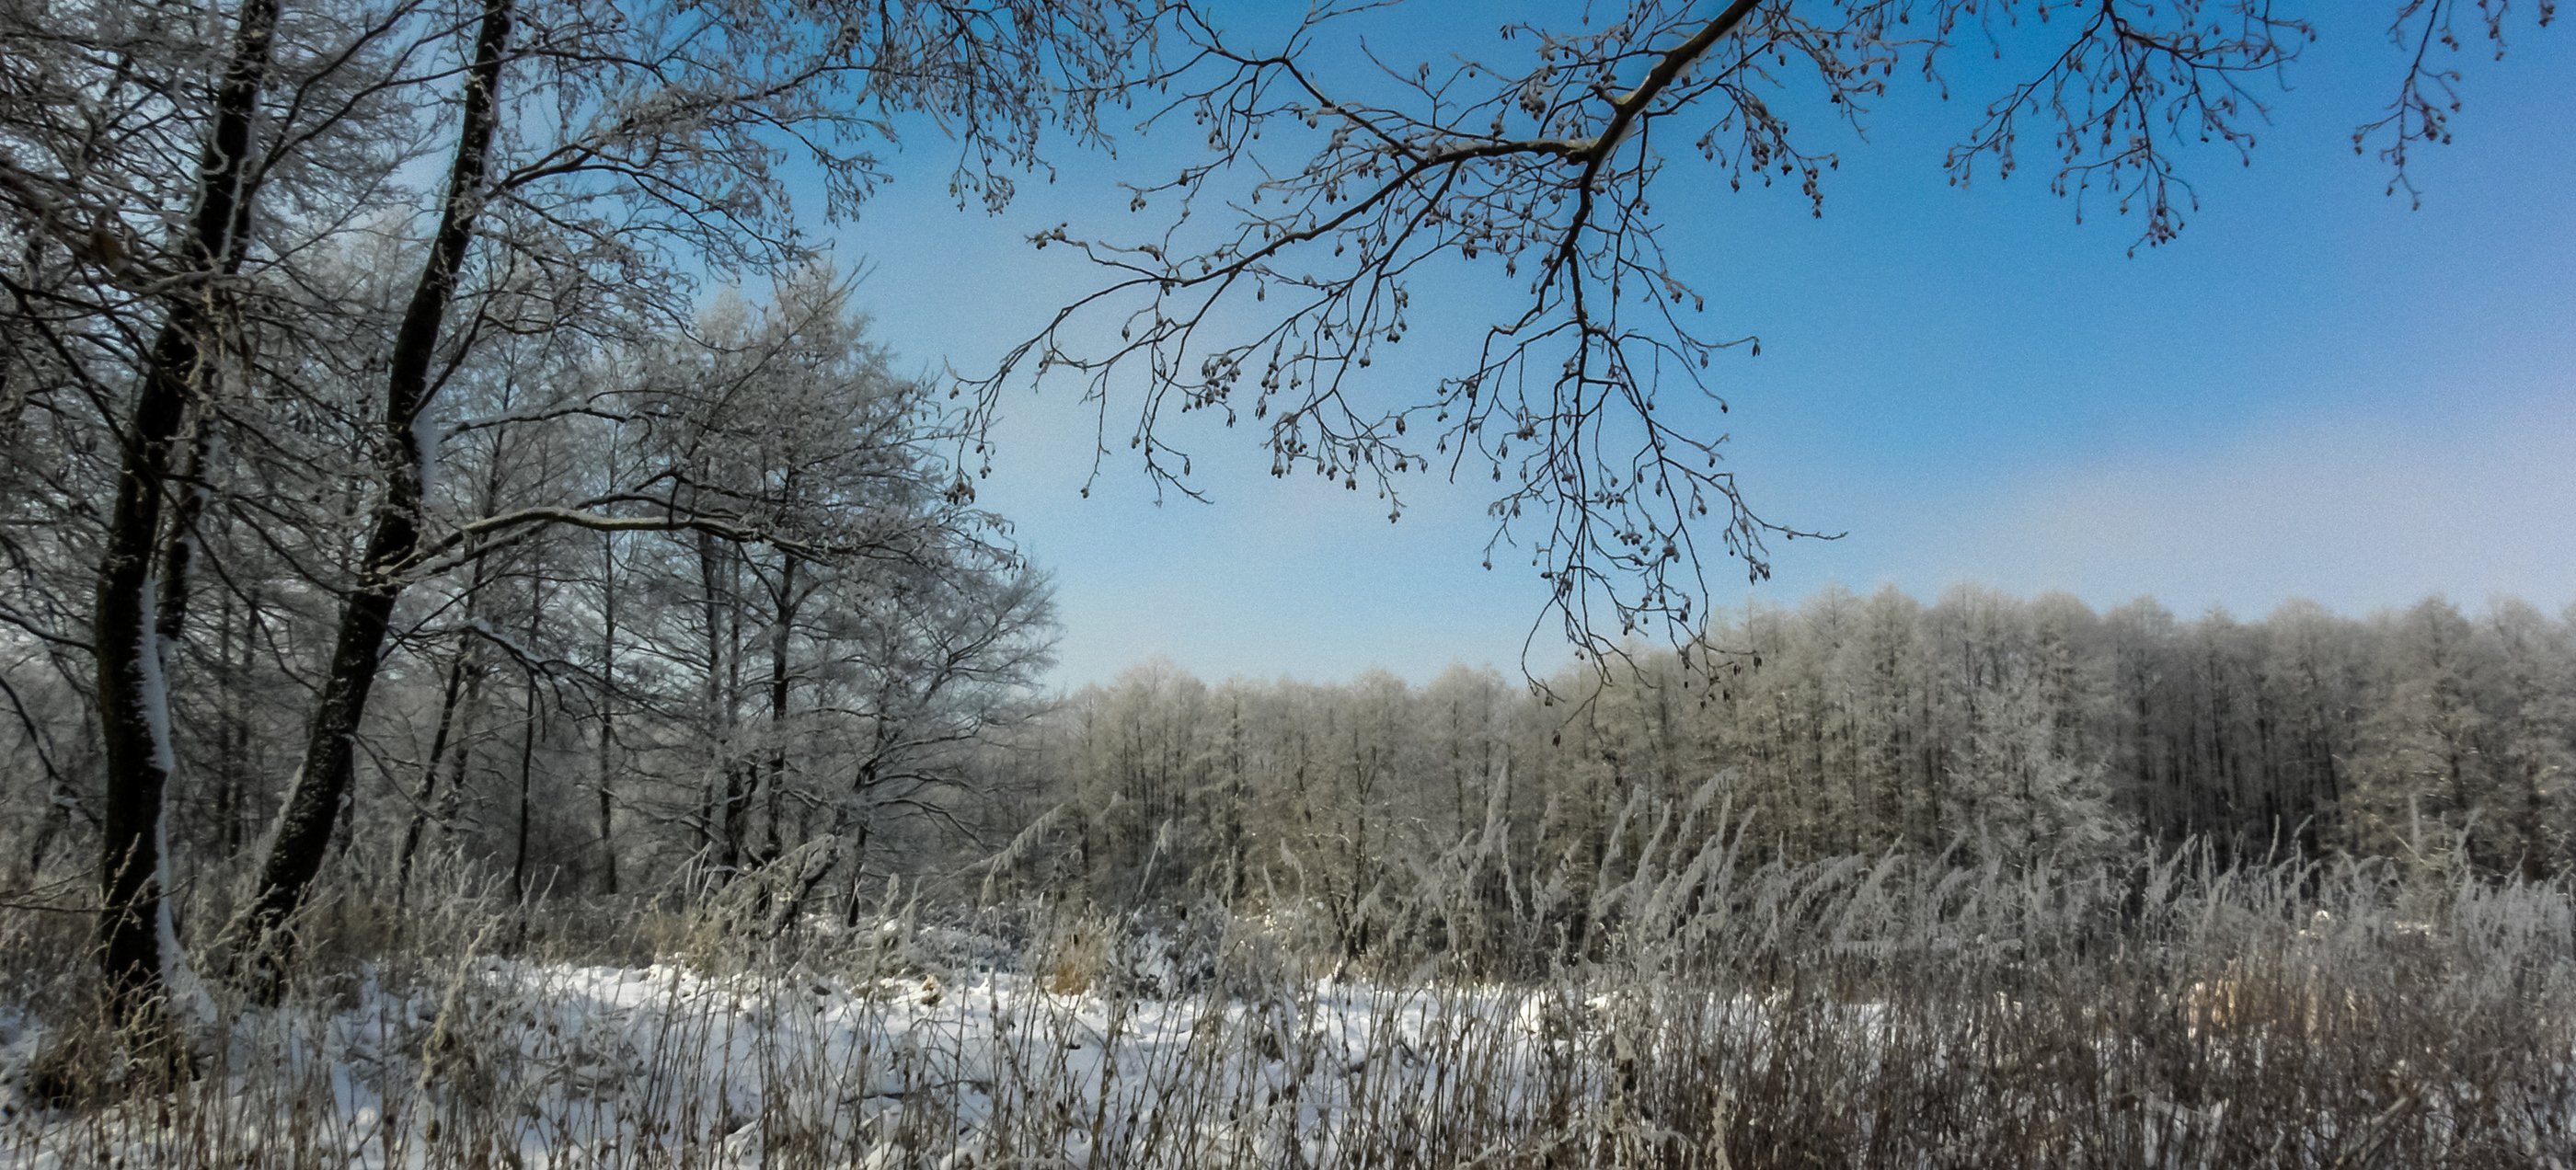 лес, зима, иней, мороз, ольха, Руслан Востриков